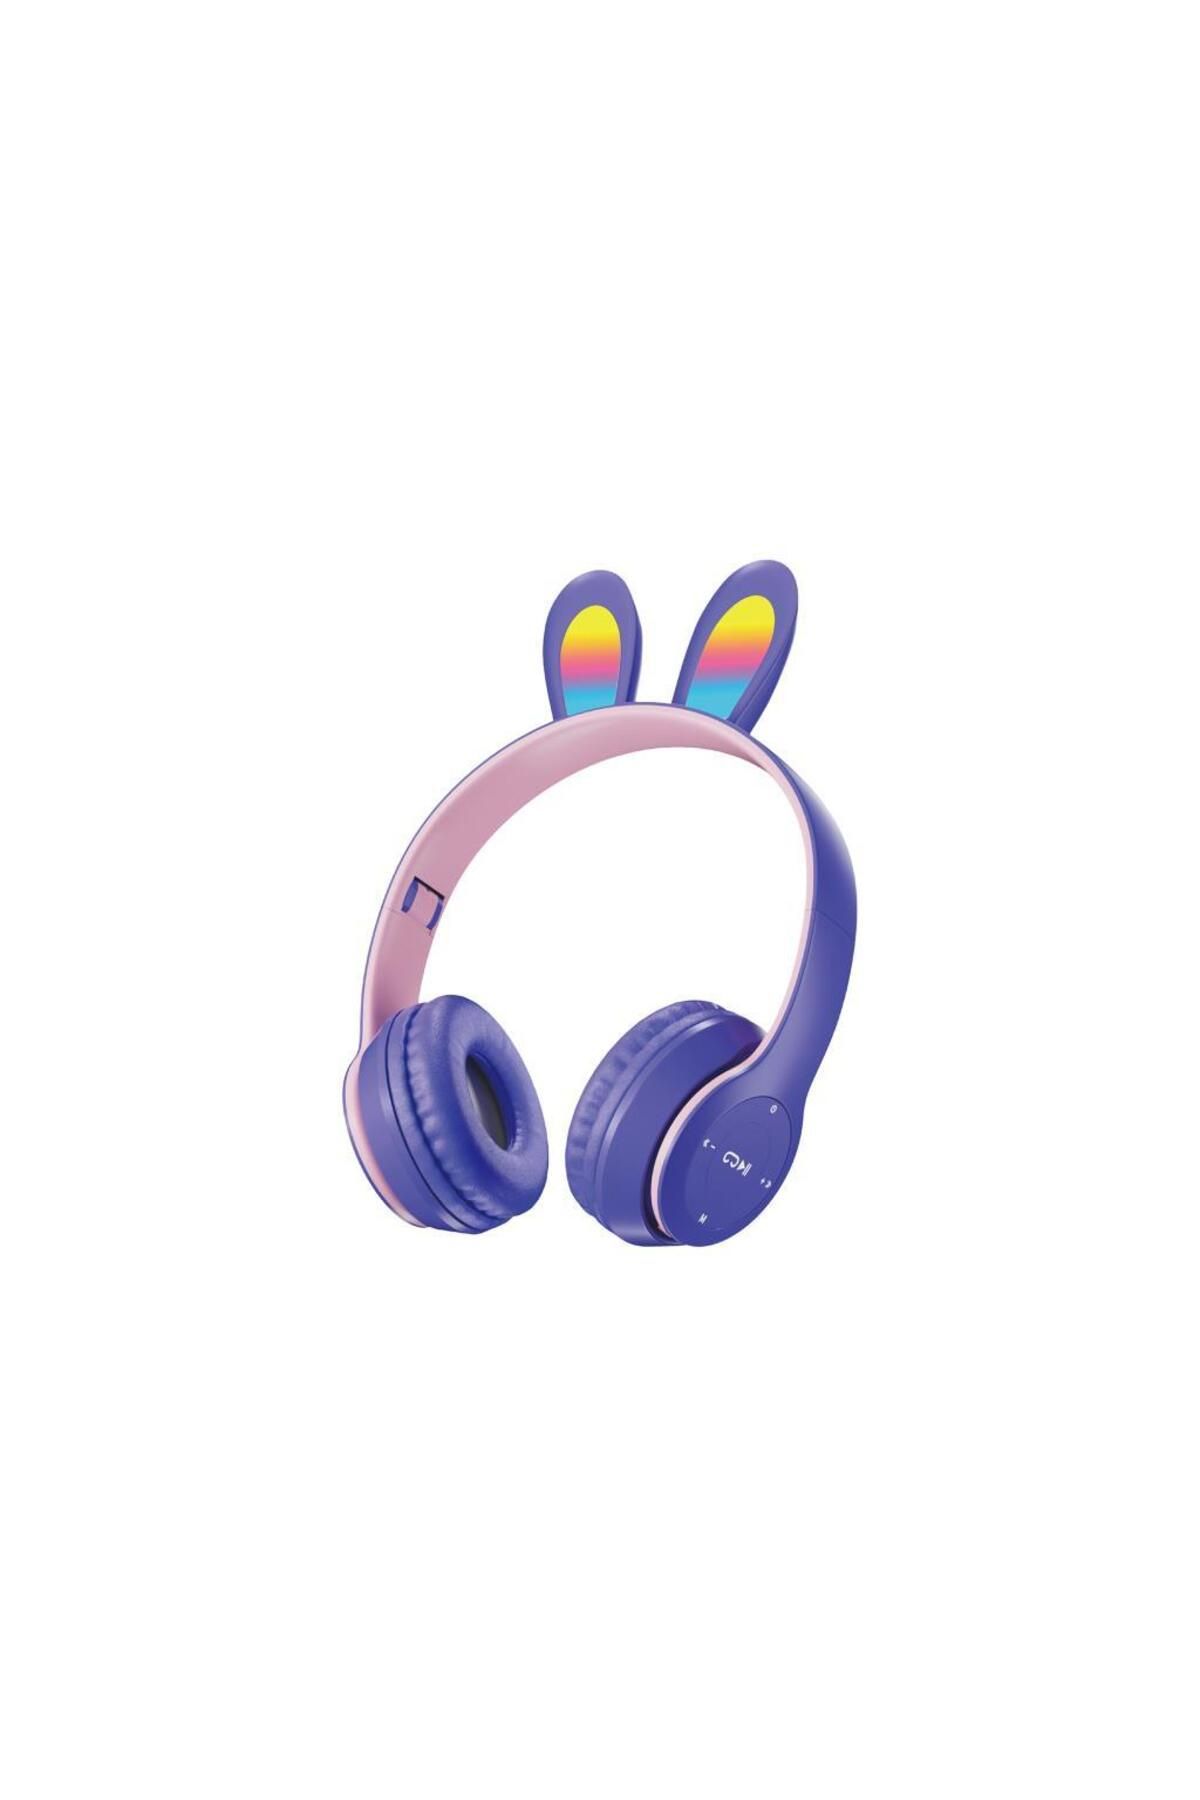 Sunix Wireless 5.0 Stereo Tavşan Kulak Üstü Bluetooth Kulaklık Mor Blt-43